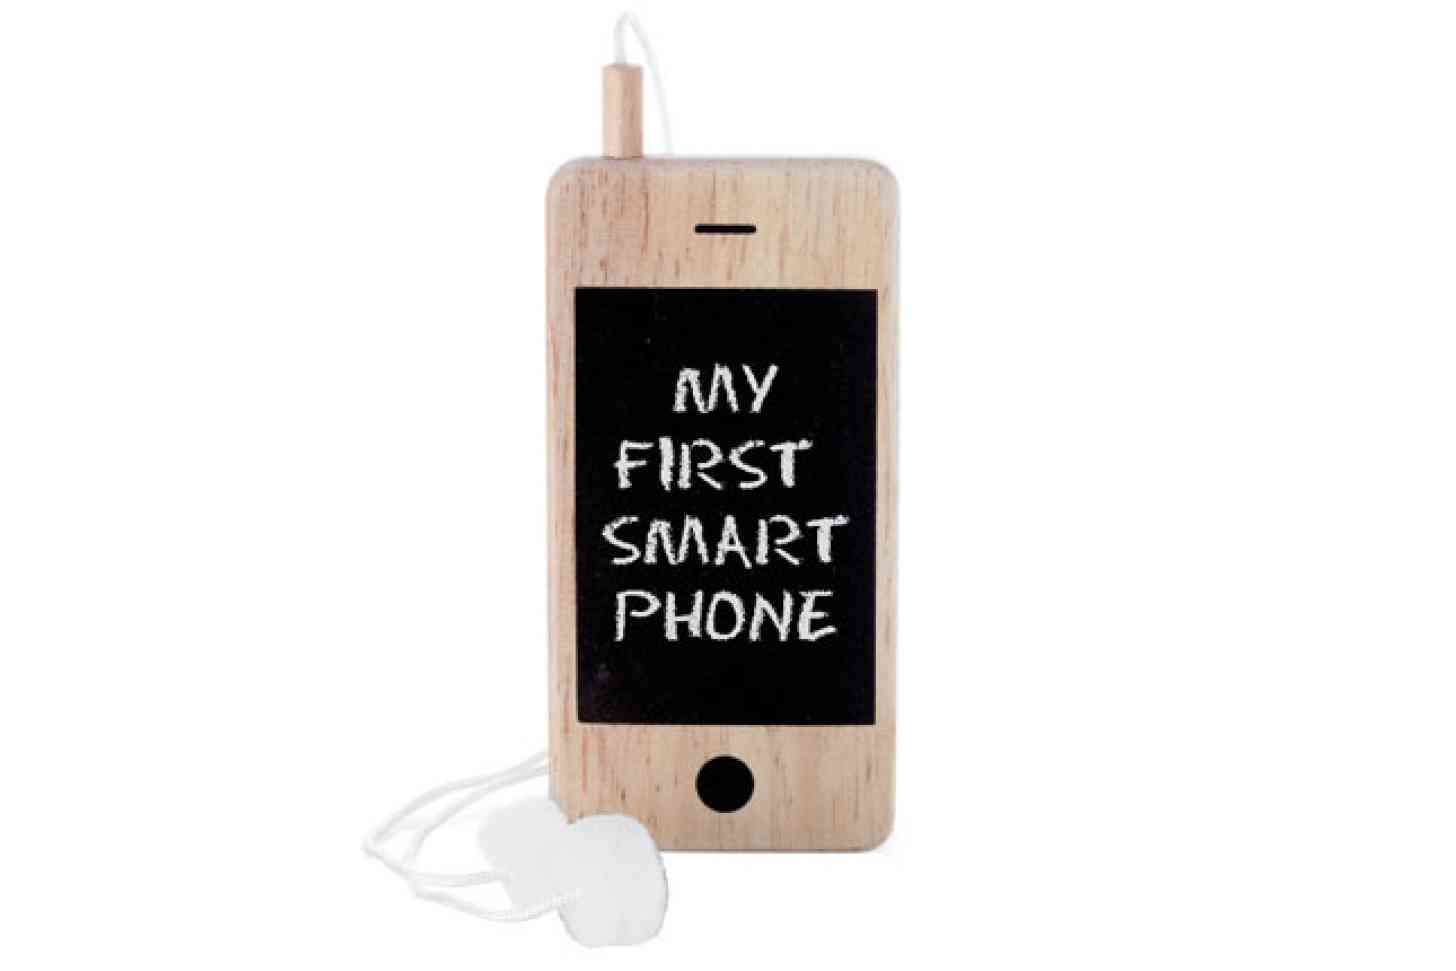 My first smartphone